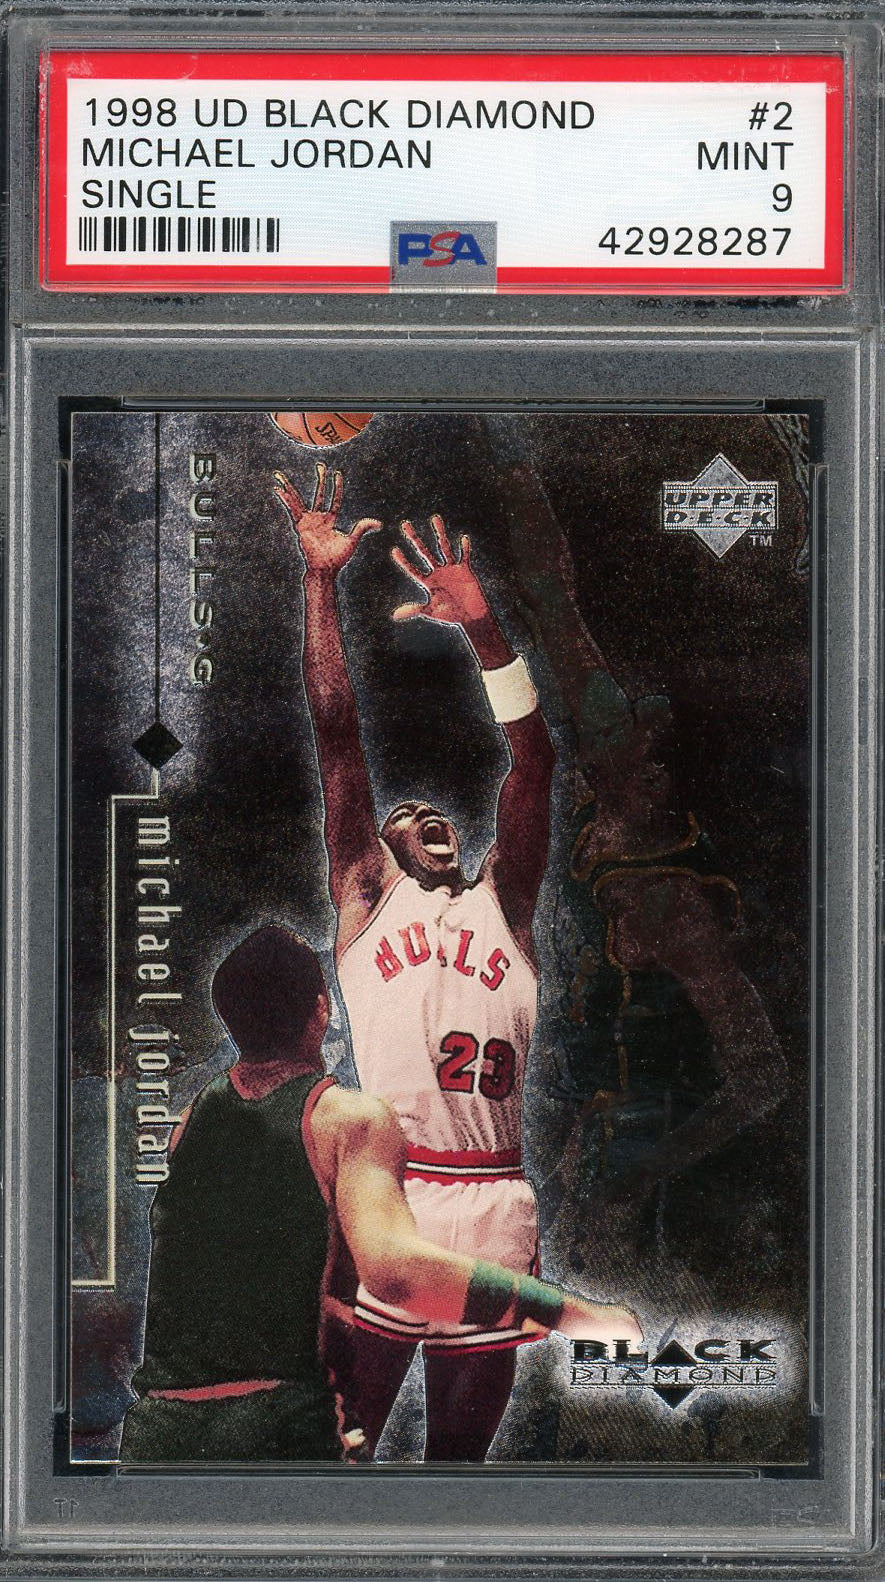 Michael Jordan 1998 Upper Deck Black Diamond Basketball Card #2 Graded PSA 9 MINT-Powers Sports Memorabilia